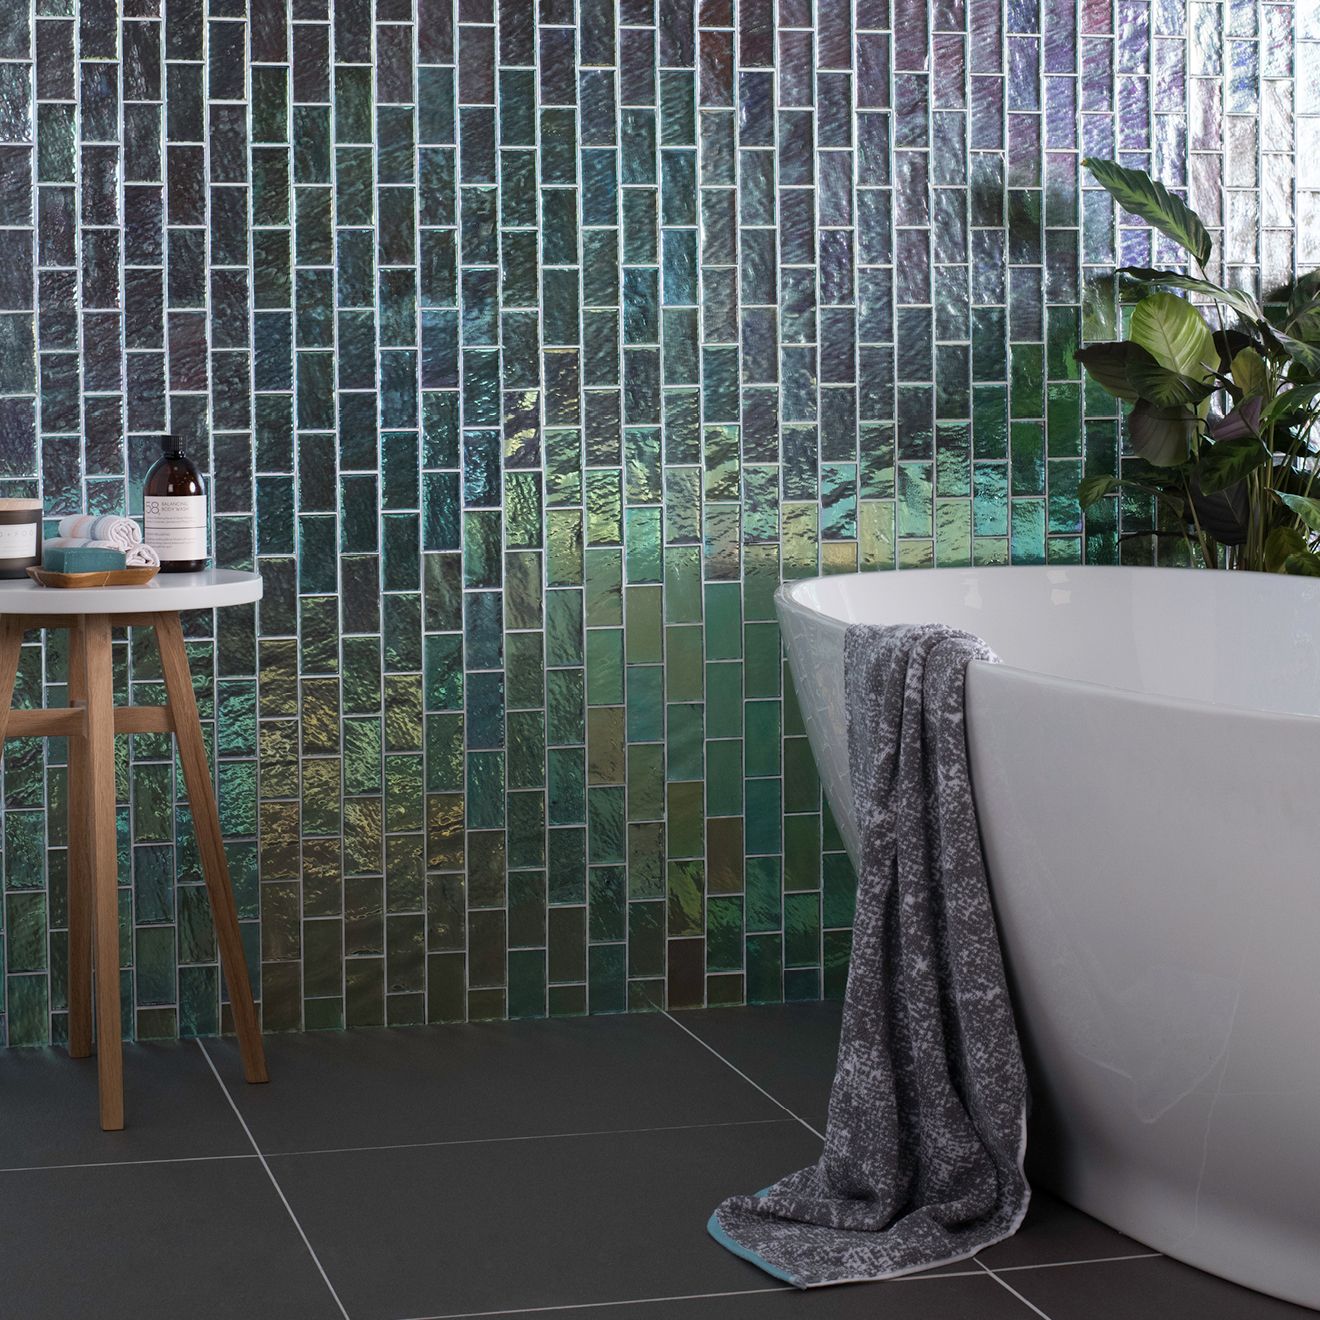 Bathroom Wall Tile Height: How High Should You Go? - BELK Tile